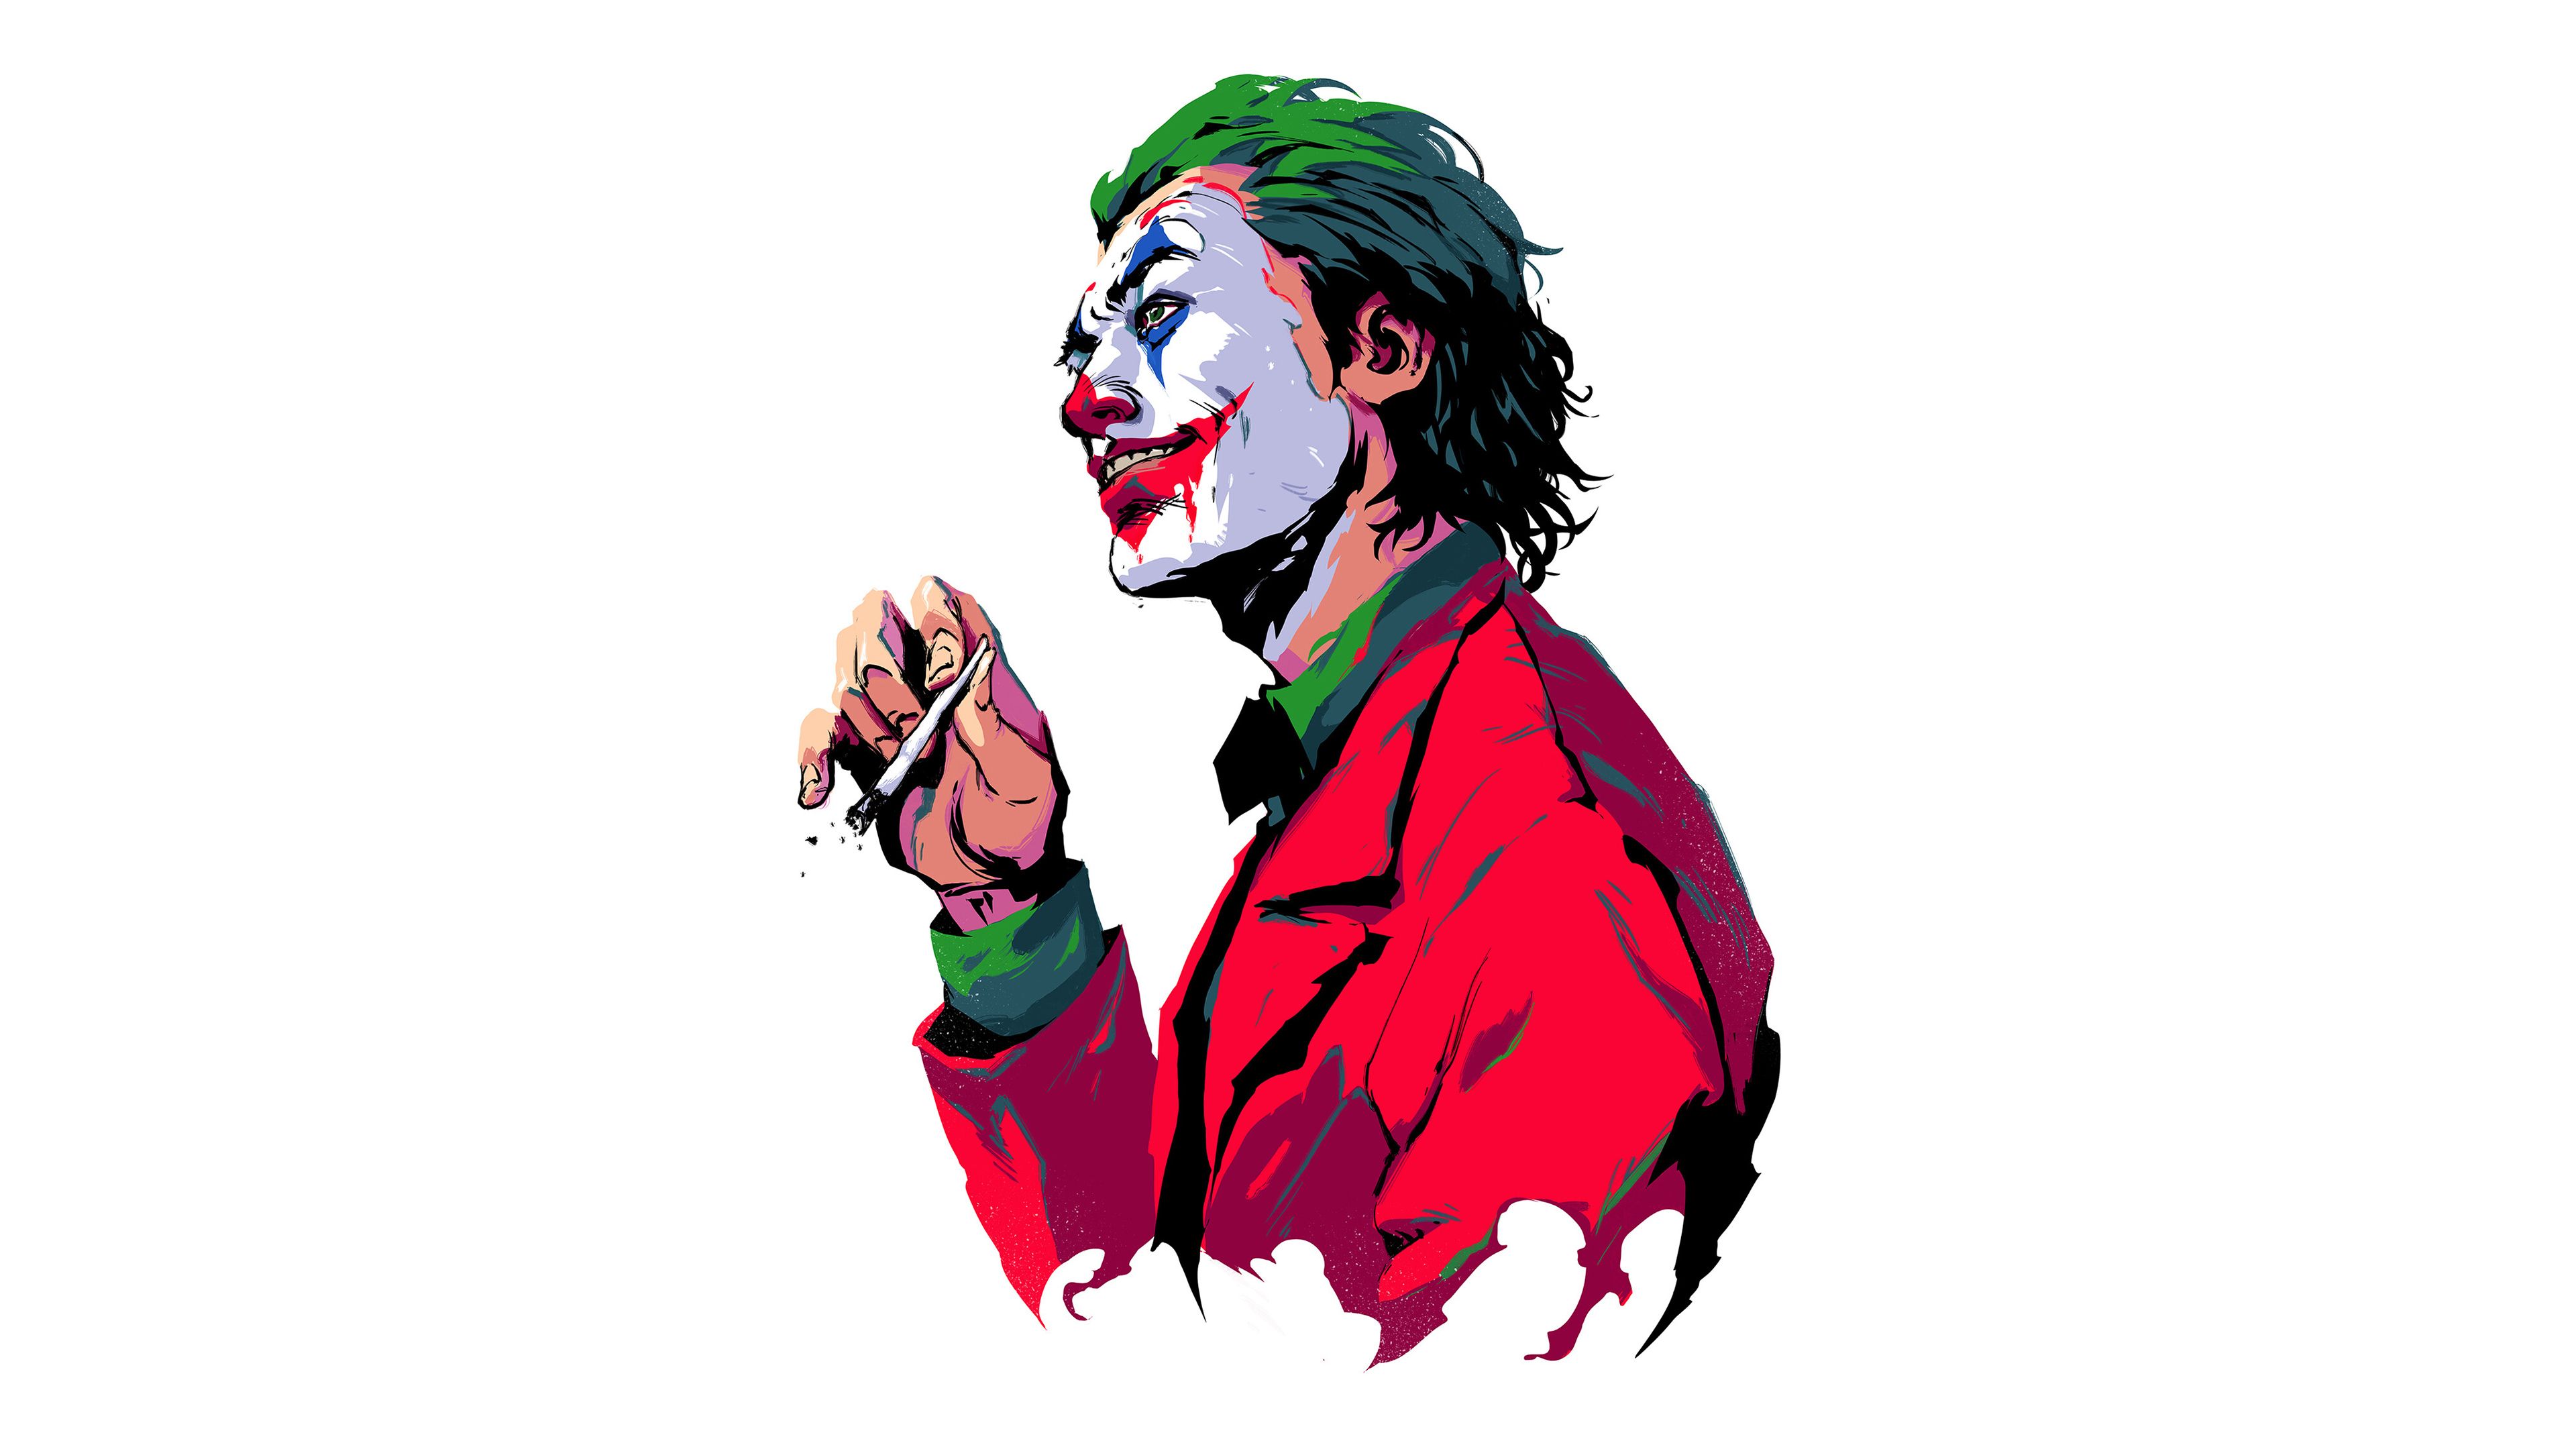 Joker Smoker Boy 4k, HD Superheroes, 4k Wallpaper, Image, Background, Photo and Picture